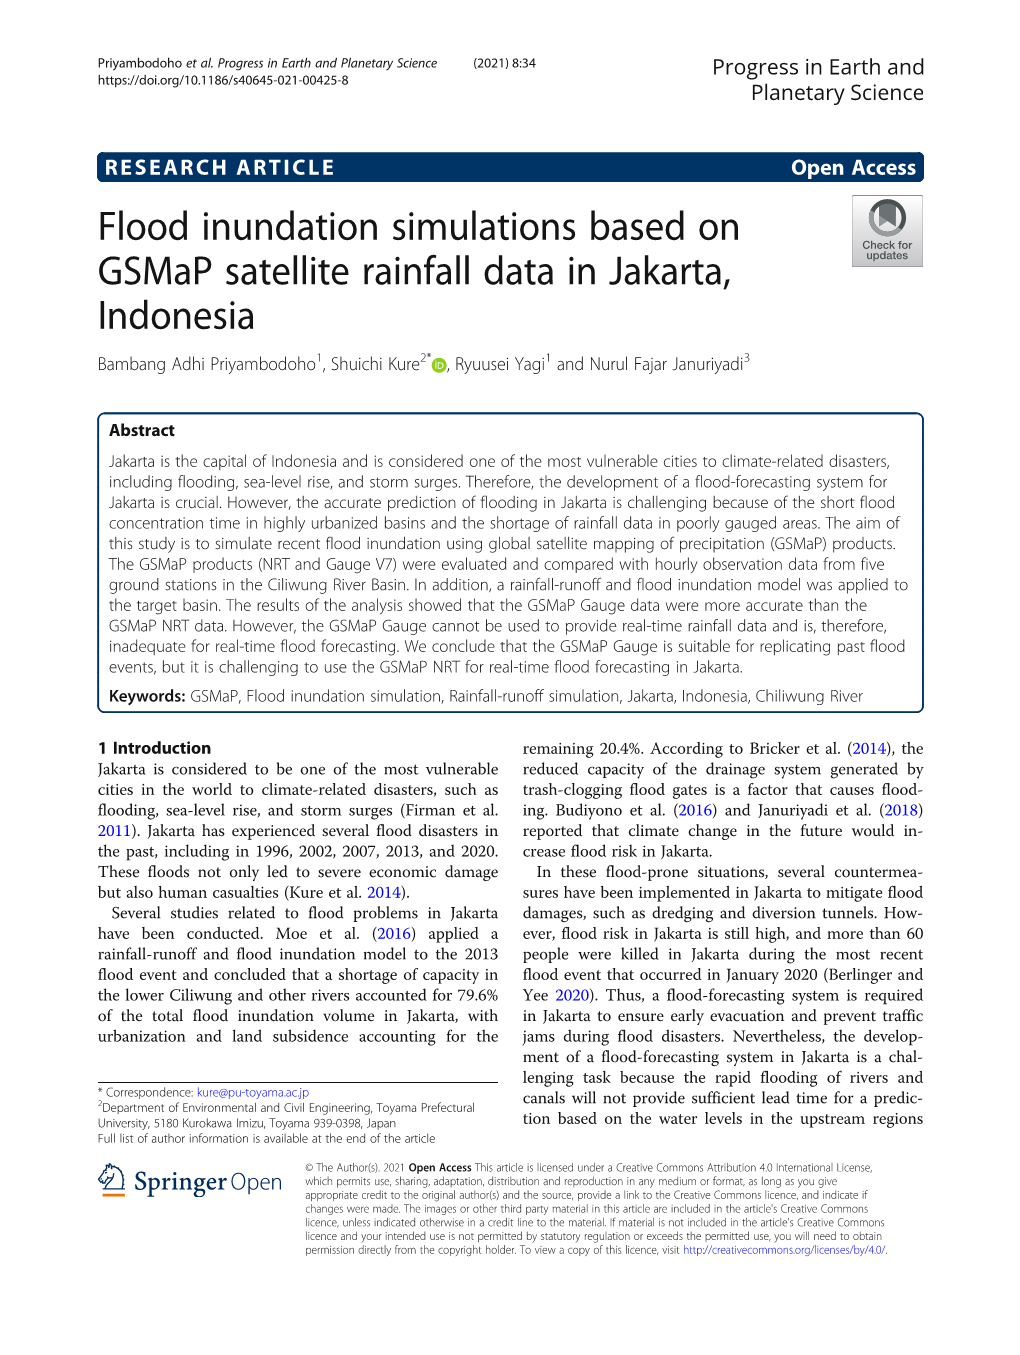 Flood Inundation Simulations Based on Gsmap Satellite Rainfall Data In